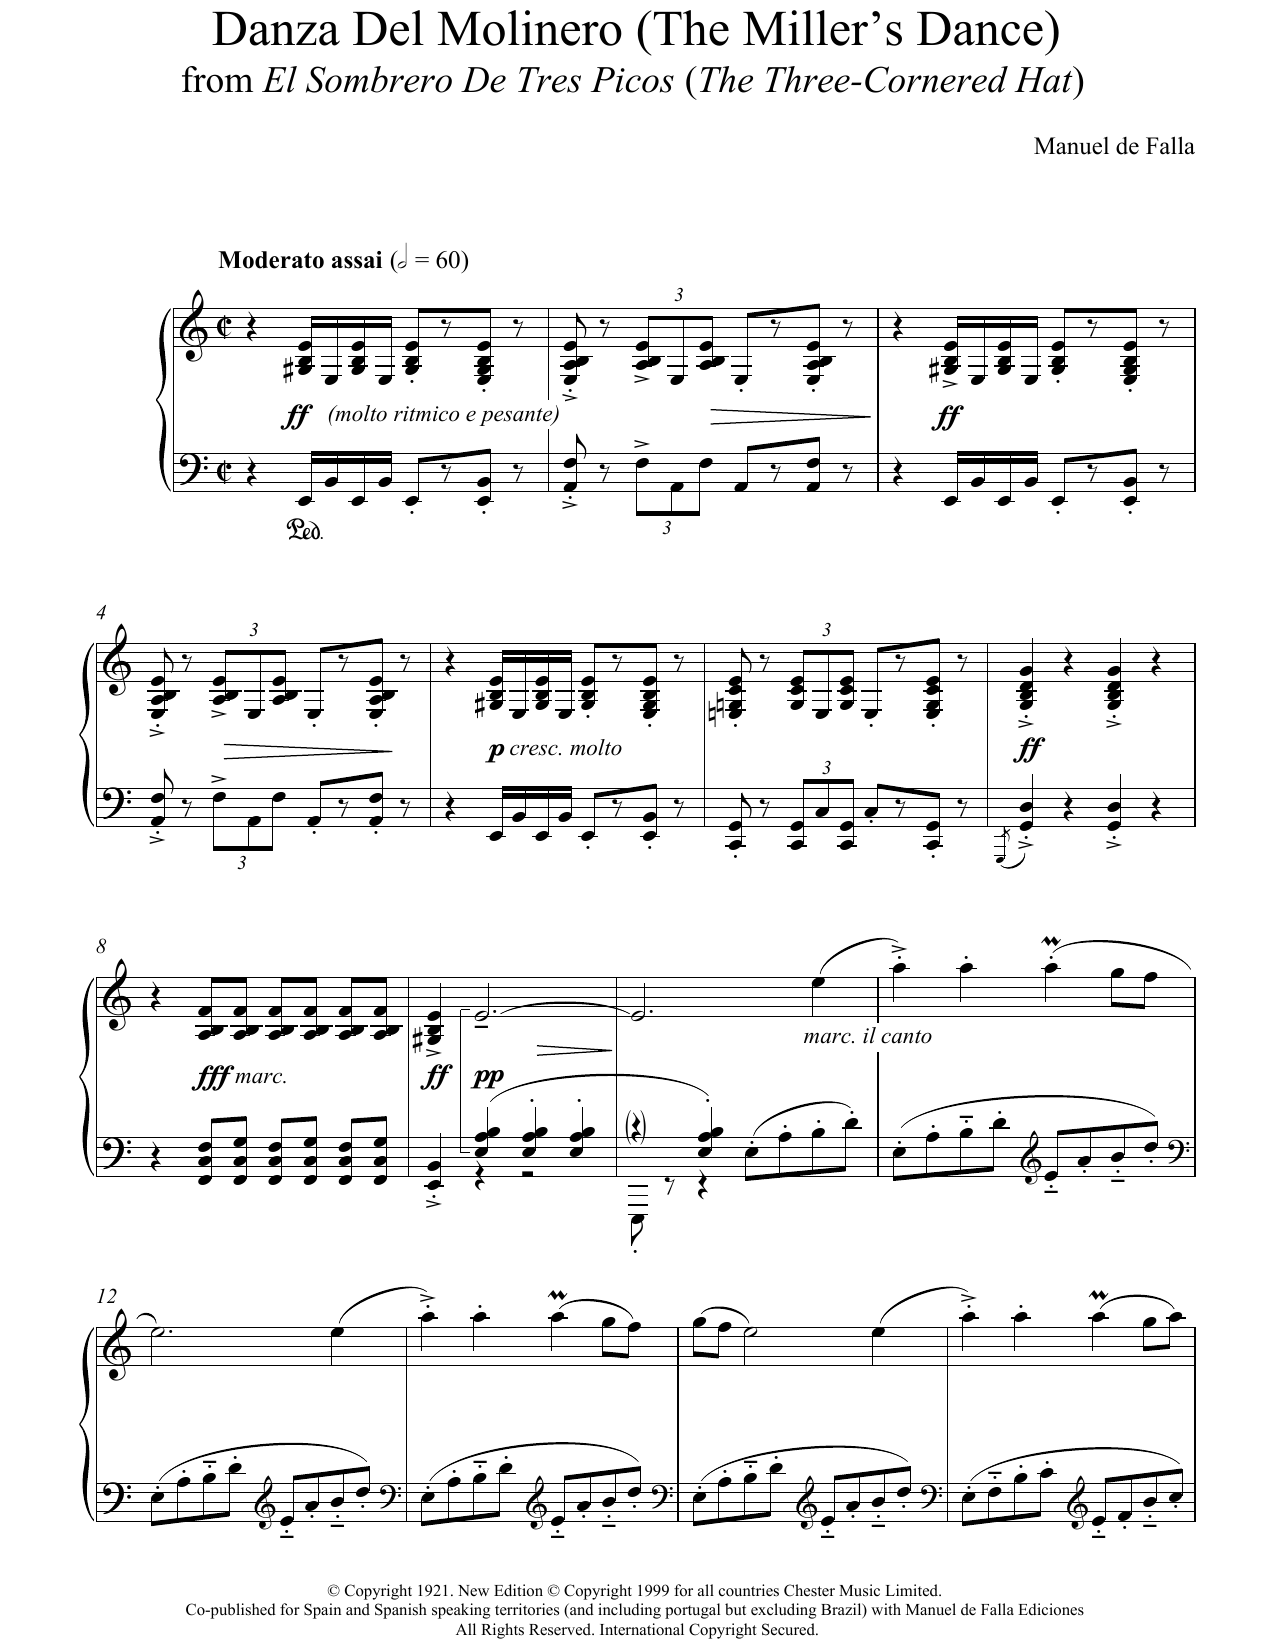 Manuel De Falla Danza Del Molinero ('The Miller's Dance') (From El Sombrero De Tres Picos ('The Three-Cornered Hat') Sheet Music Notes & Chords for Piano - Download or Print PDF